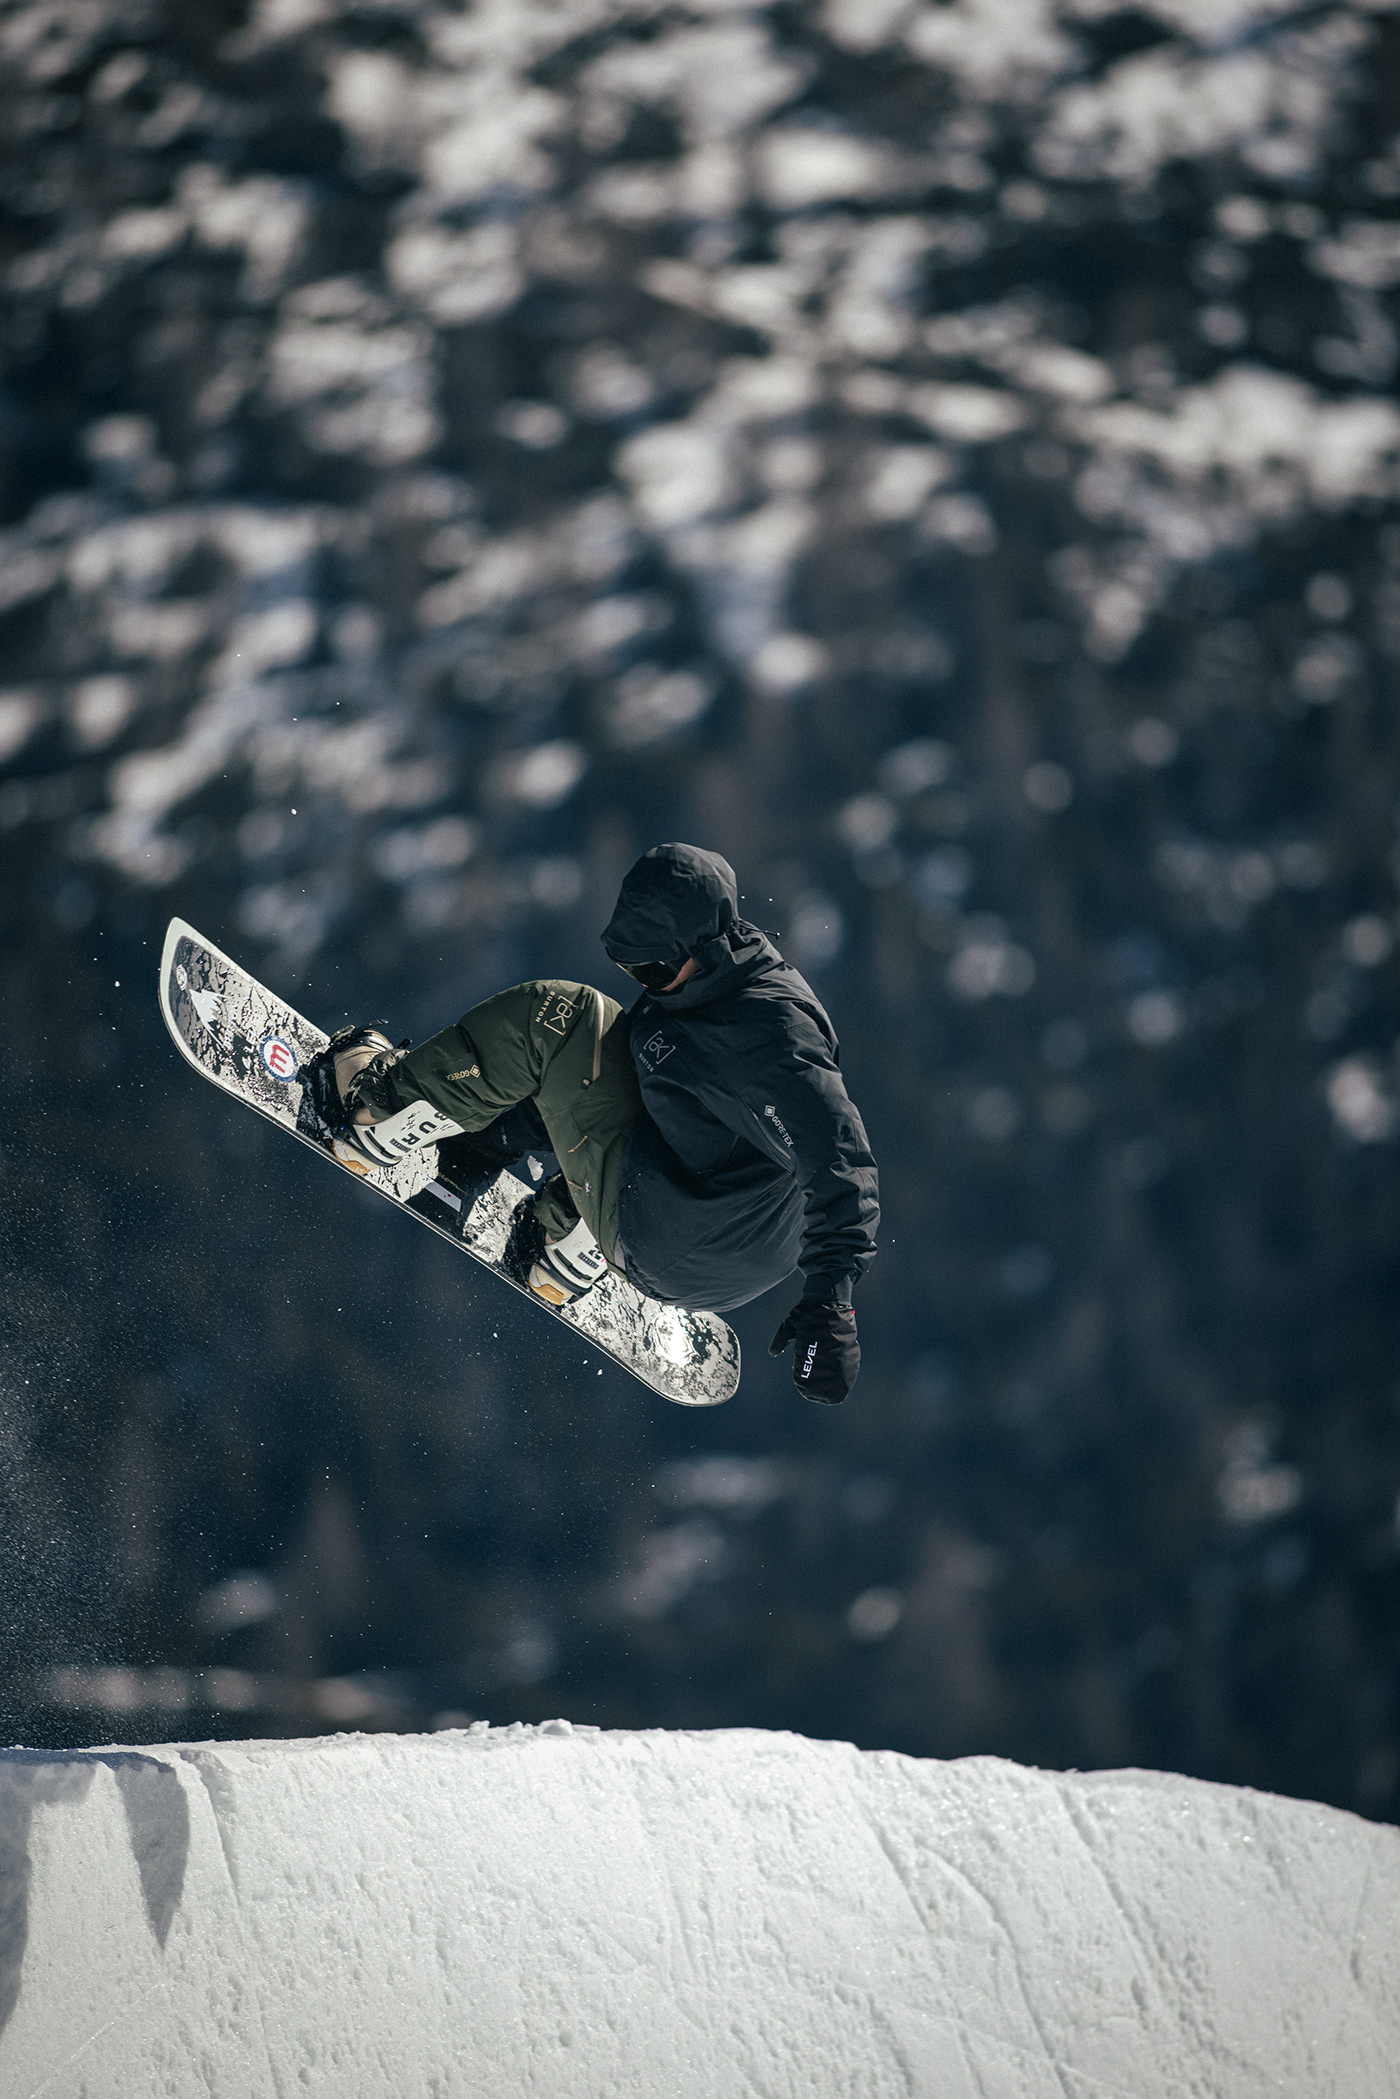 snow freestyle Snowboarding winter photoshoot portrait editorial slopestyle snowboard